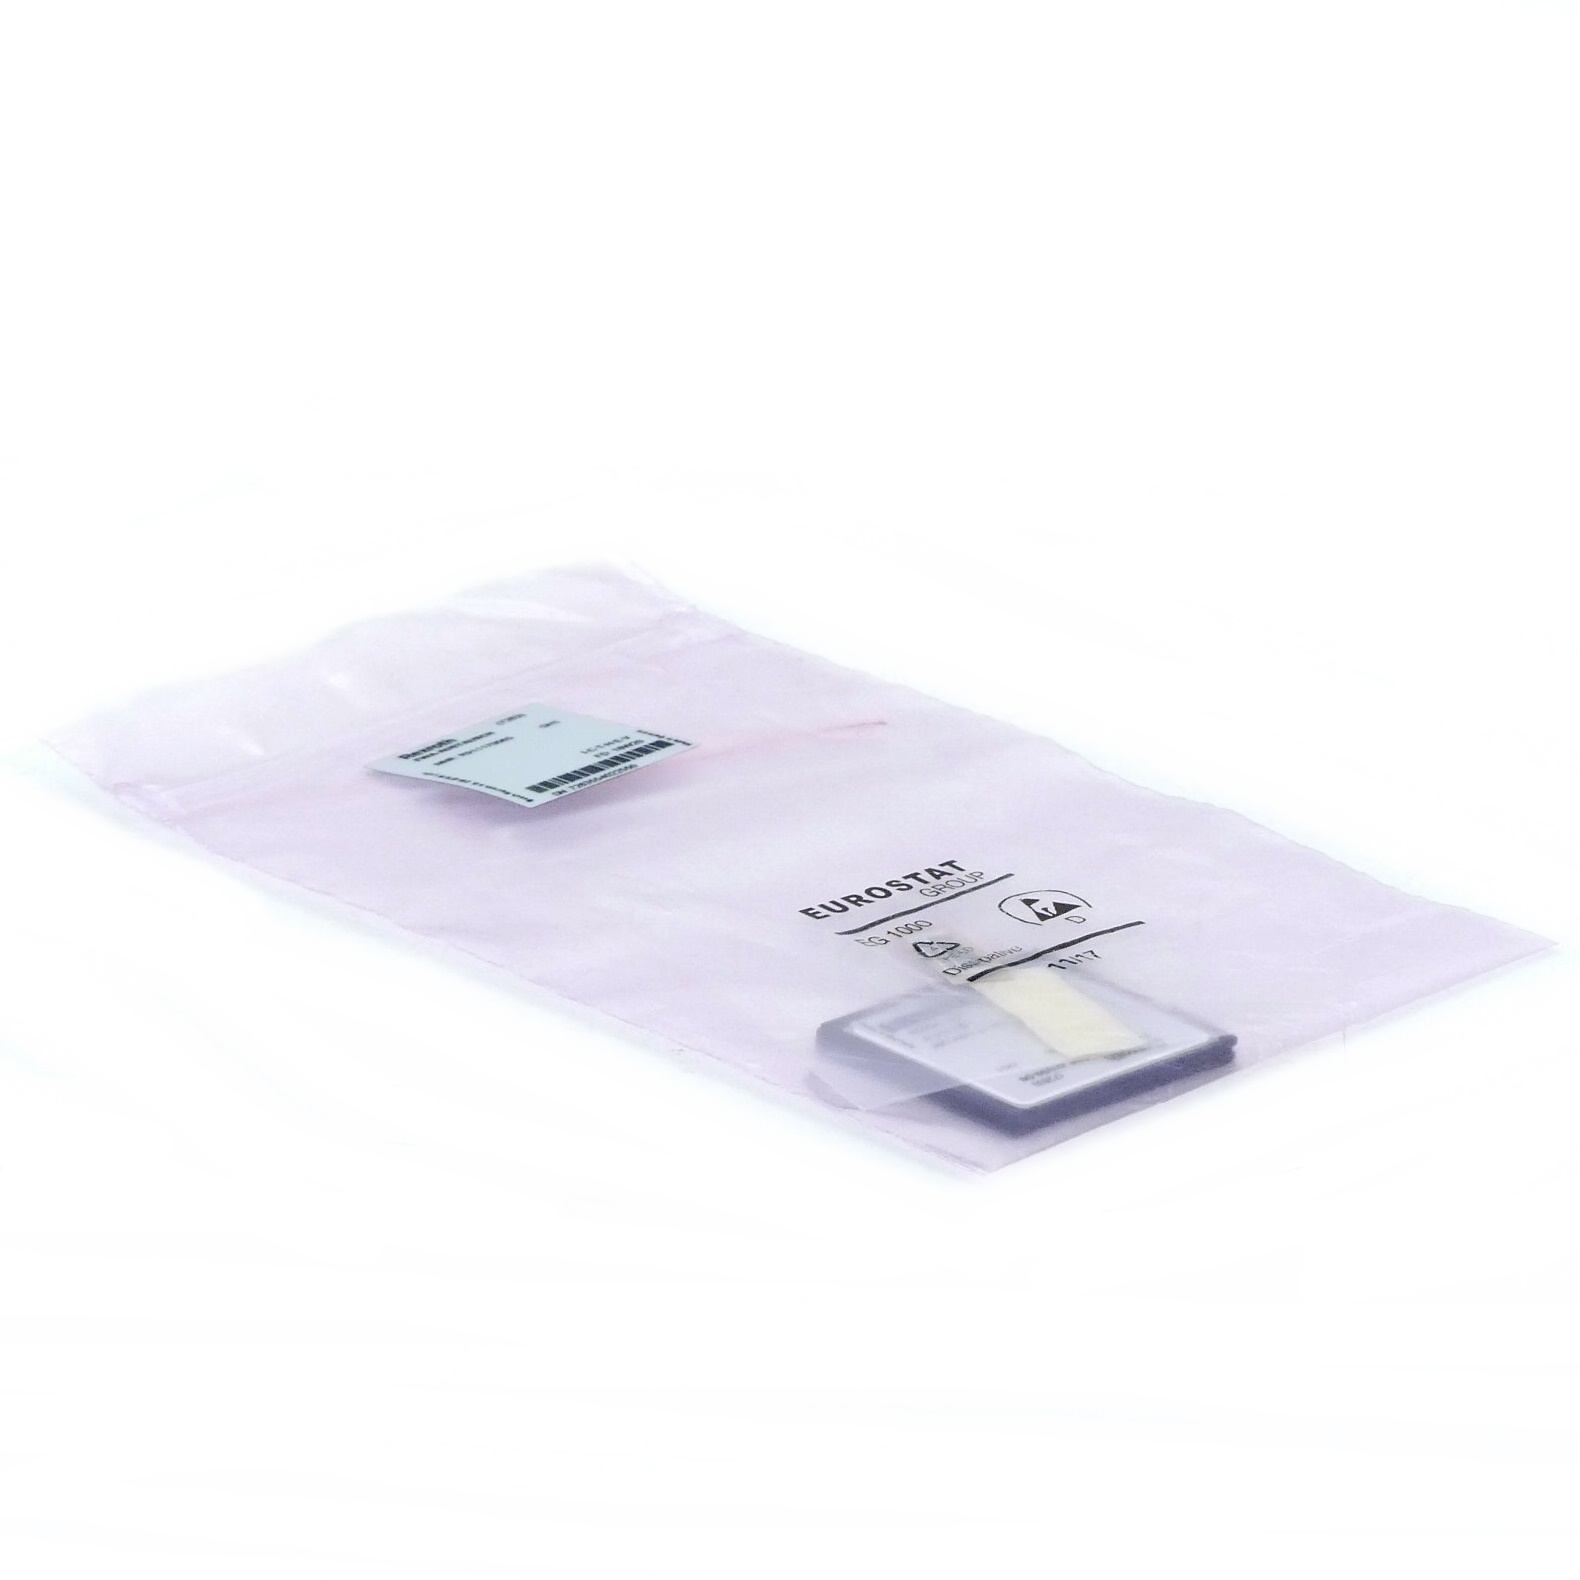 Compact Flash Card FWA-VEP*03-CWL-01V09-D0 